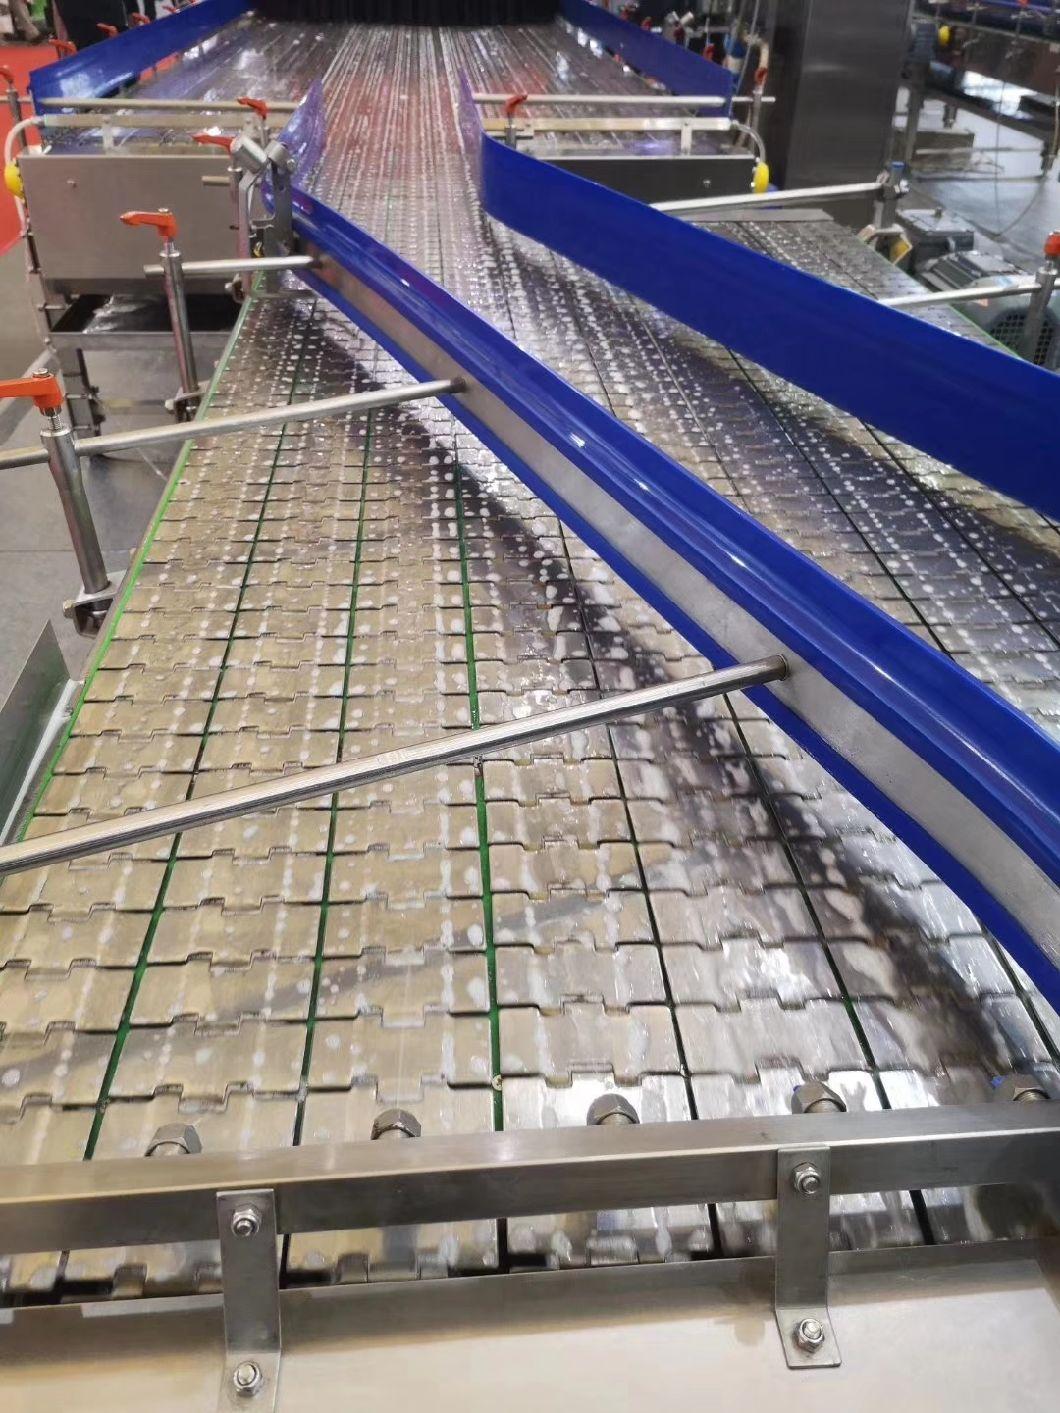 Ss Stainless Steel Chain Conveyor Cystem Used in Beer/Beverage Industry